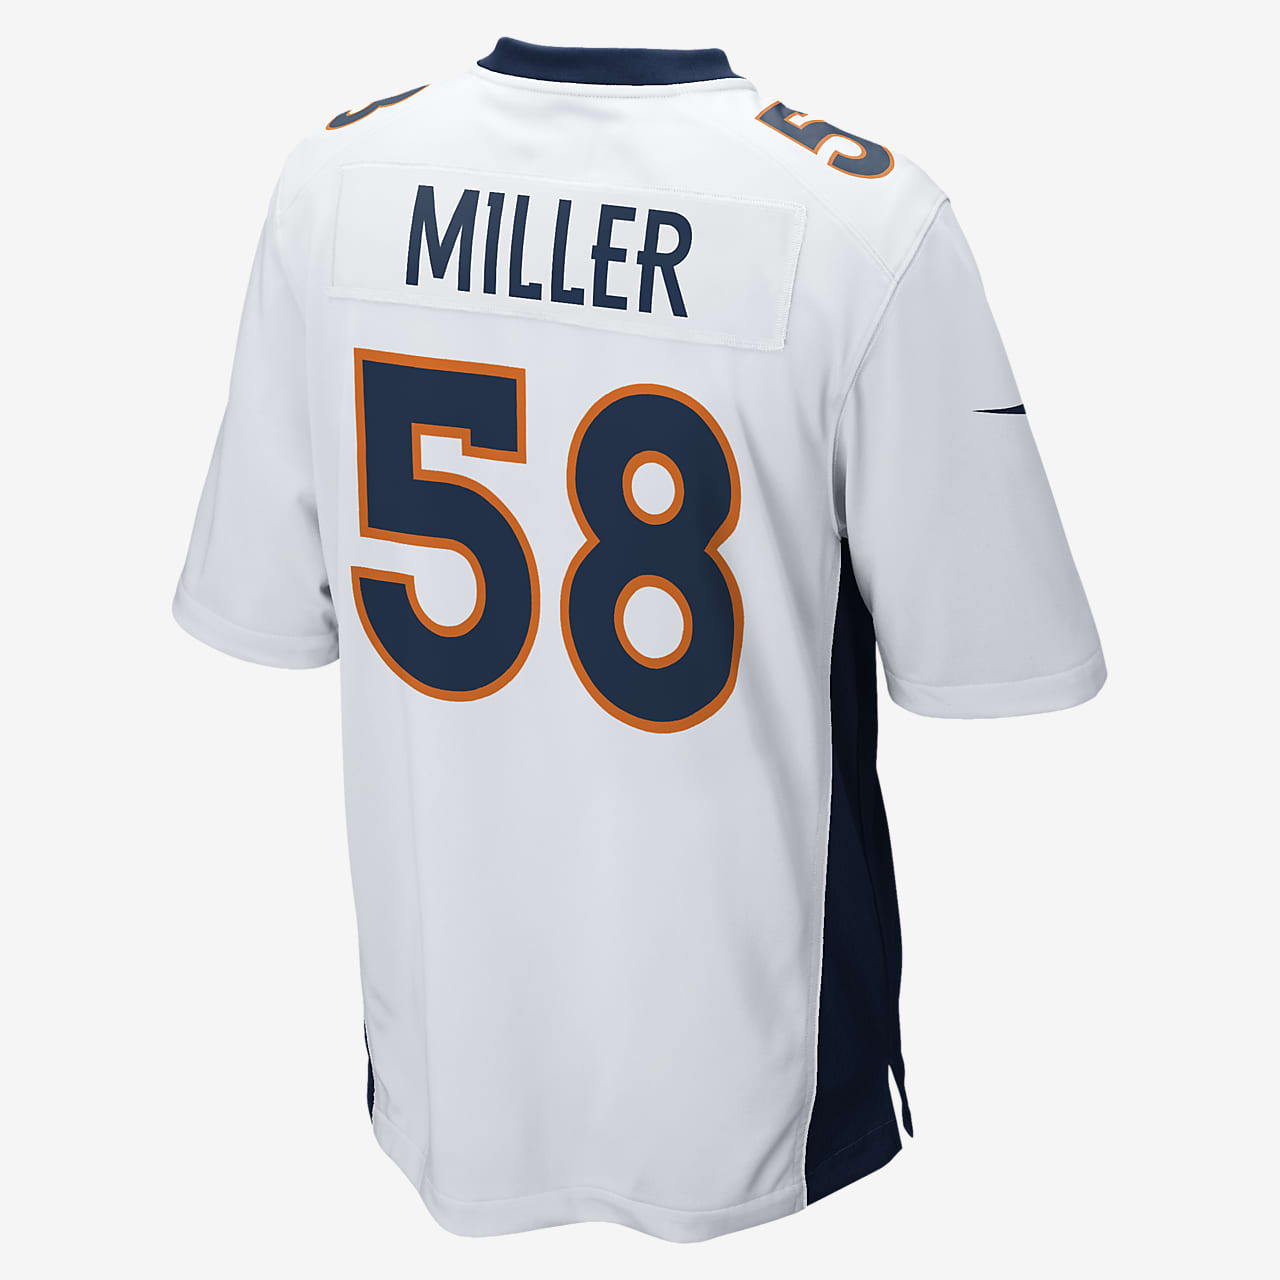 NFL Denver Broncos (Von Miller) Men's Game Football Jersey